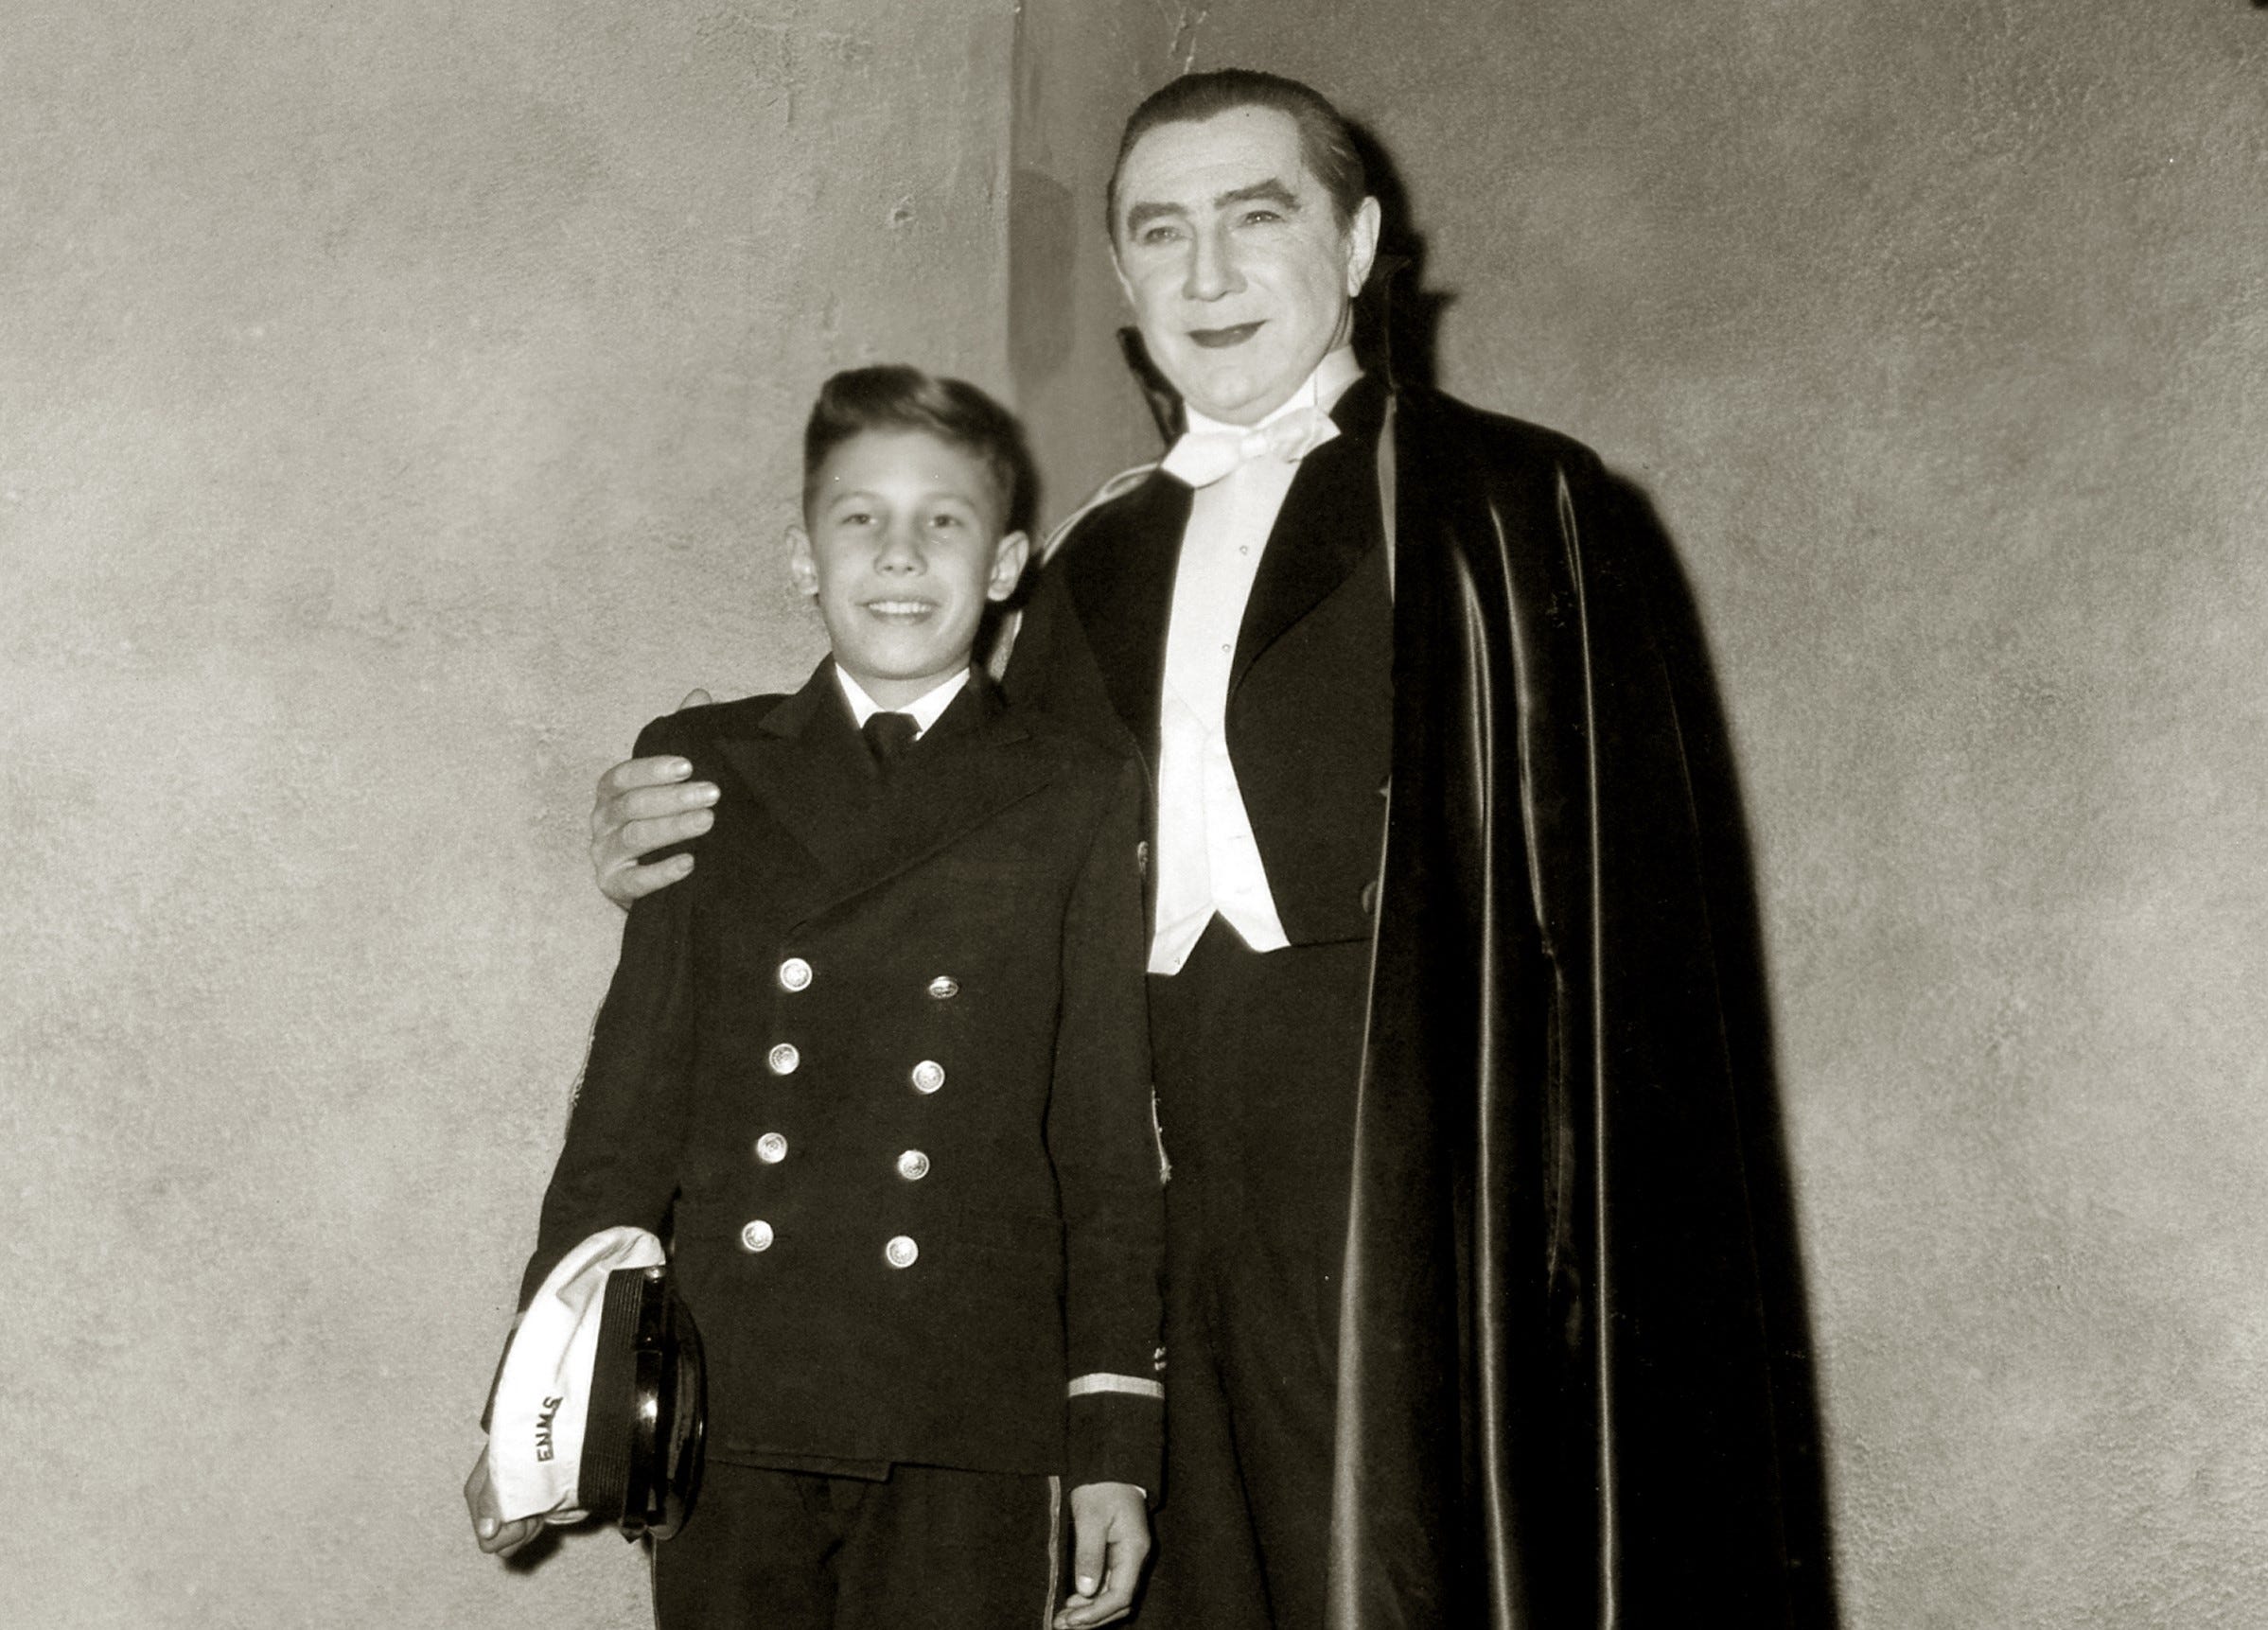 Bela Lugosi Jr Recalls Growing Up With Dracula In His Blood